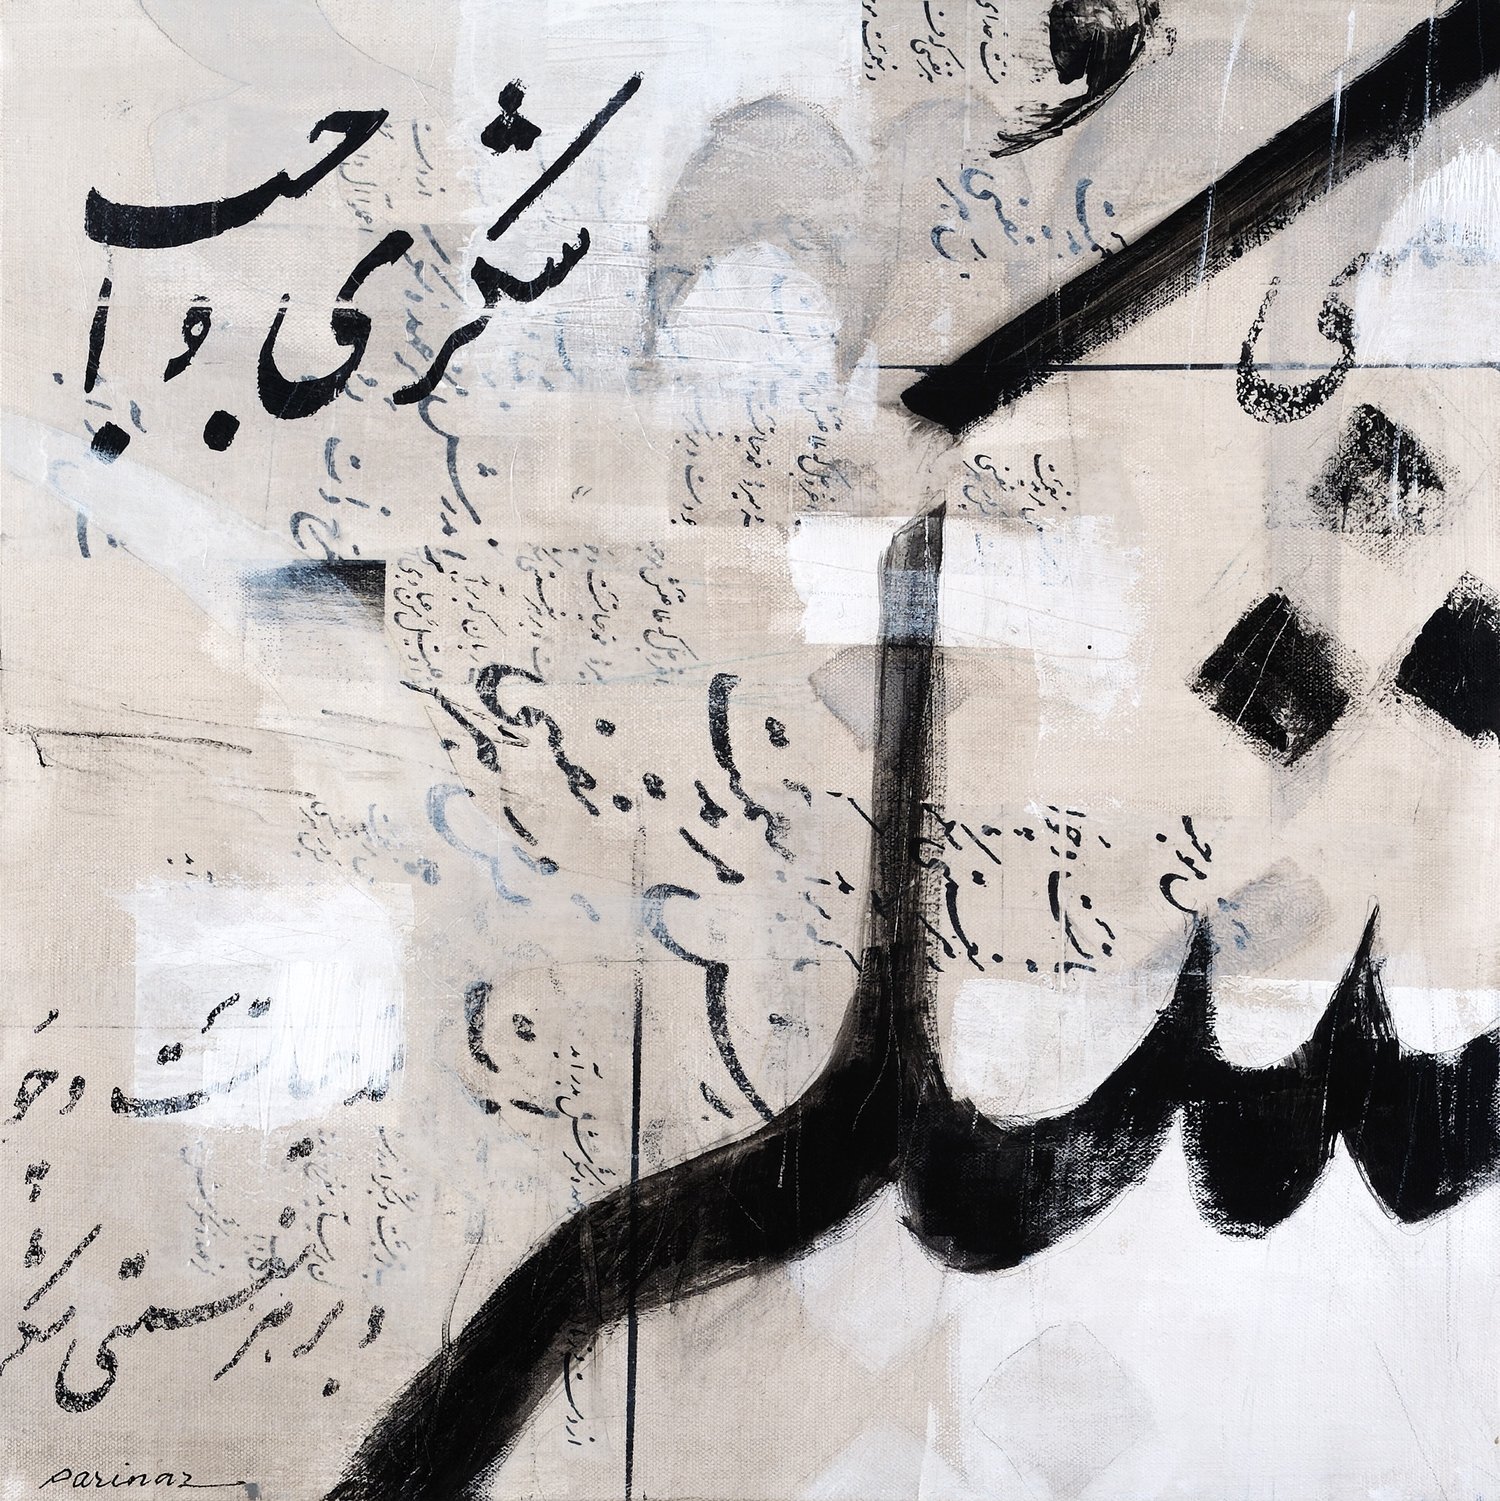   Shokr by Parinaz Ziai Bahadori   20”x 20”, Acrylic, ink and mixed media on canvas, 